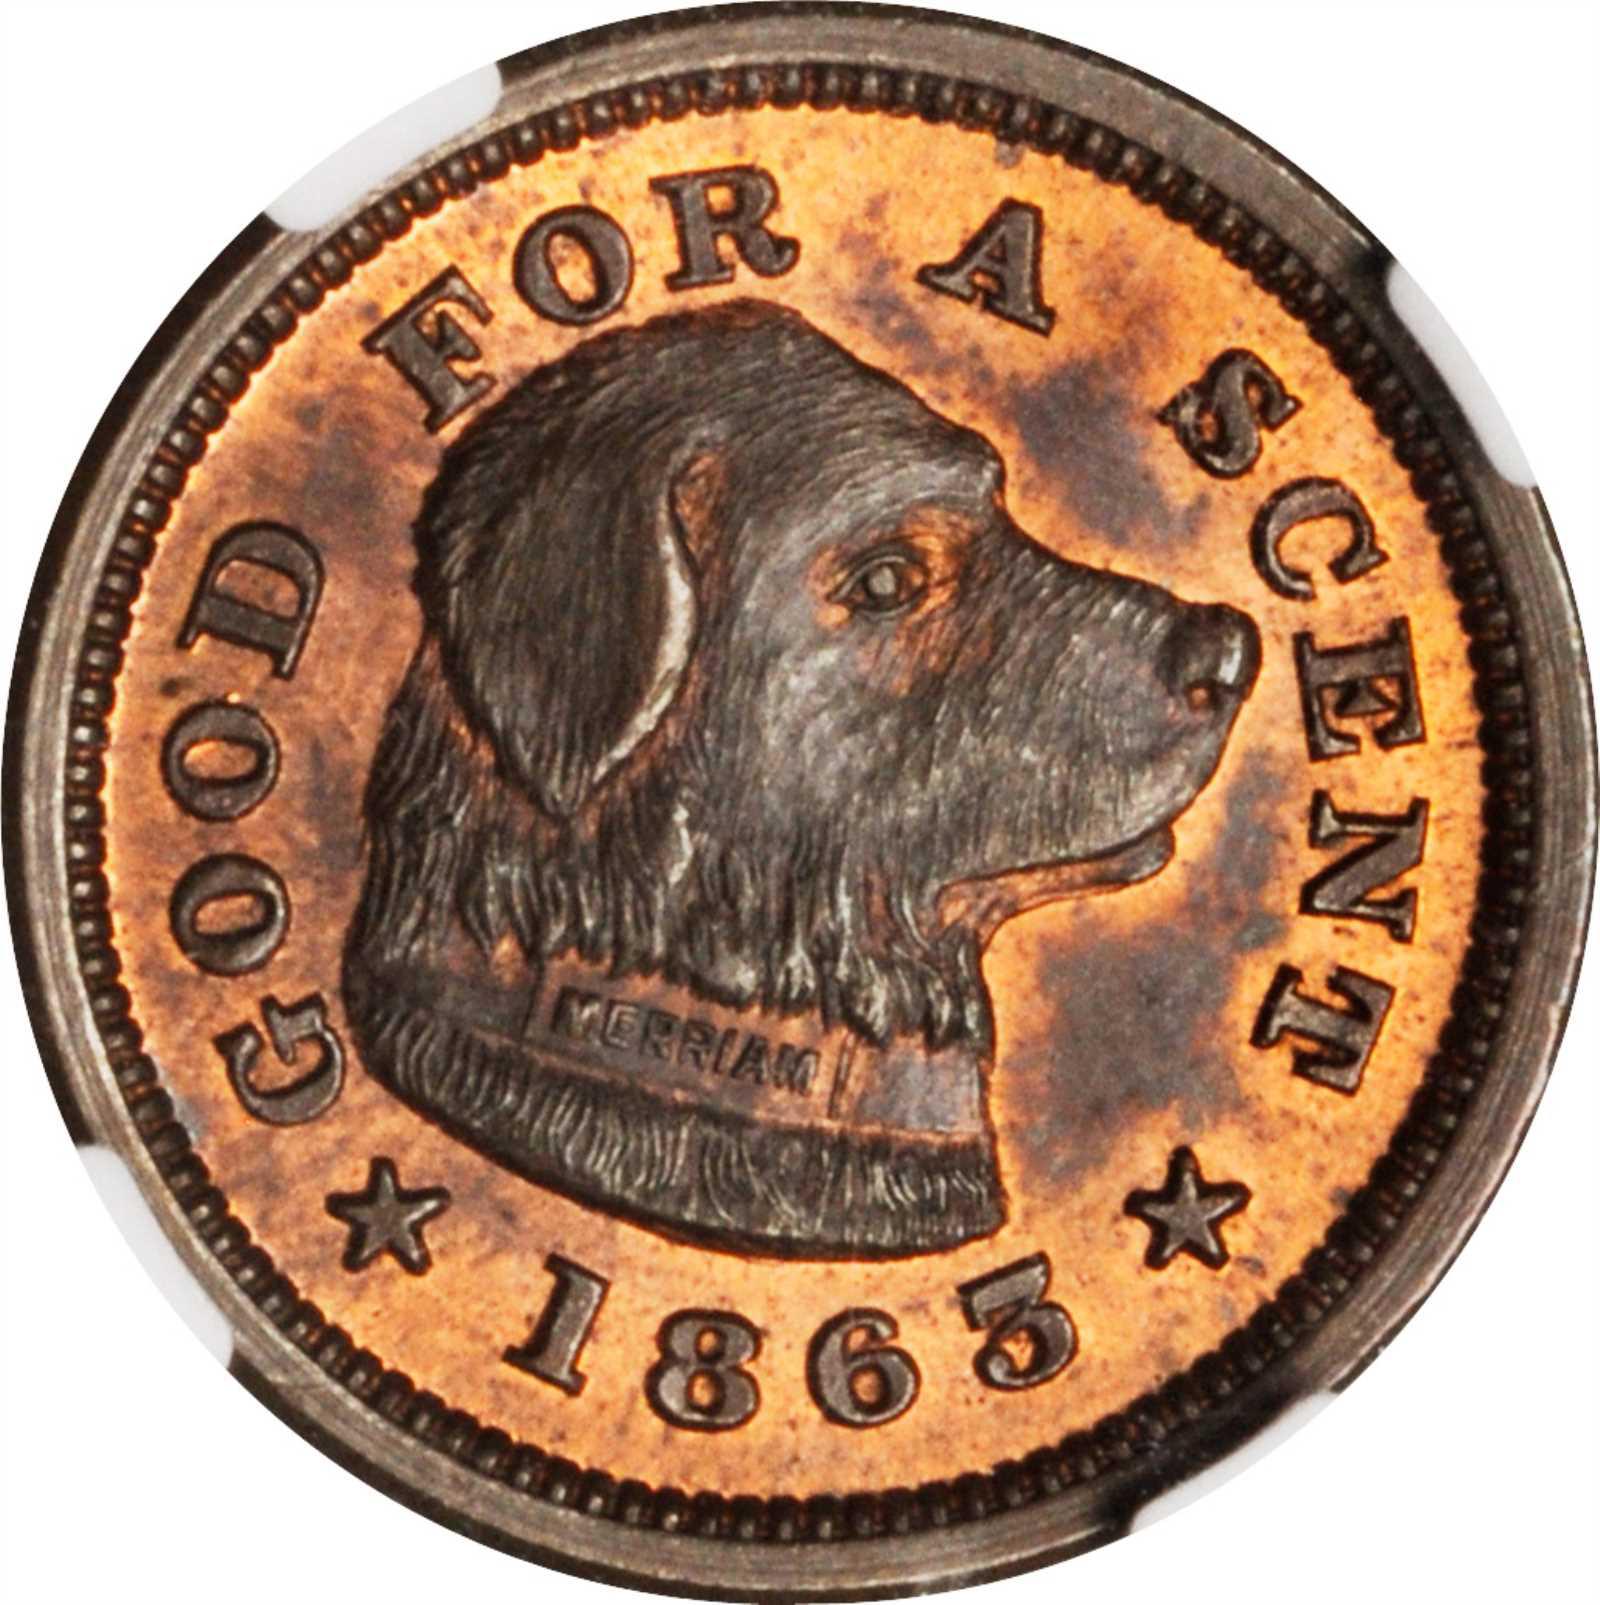 Massachusetts-Boston. 1863 Joseph H. Merriam. Fuld-115E-1a. Rarity-4. Copper. 19 mm. MS-64 RB (NGC). Image courtesy Stack's Bowers Auctions